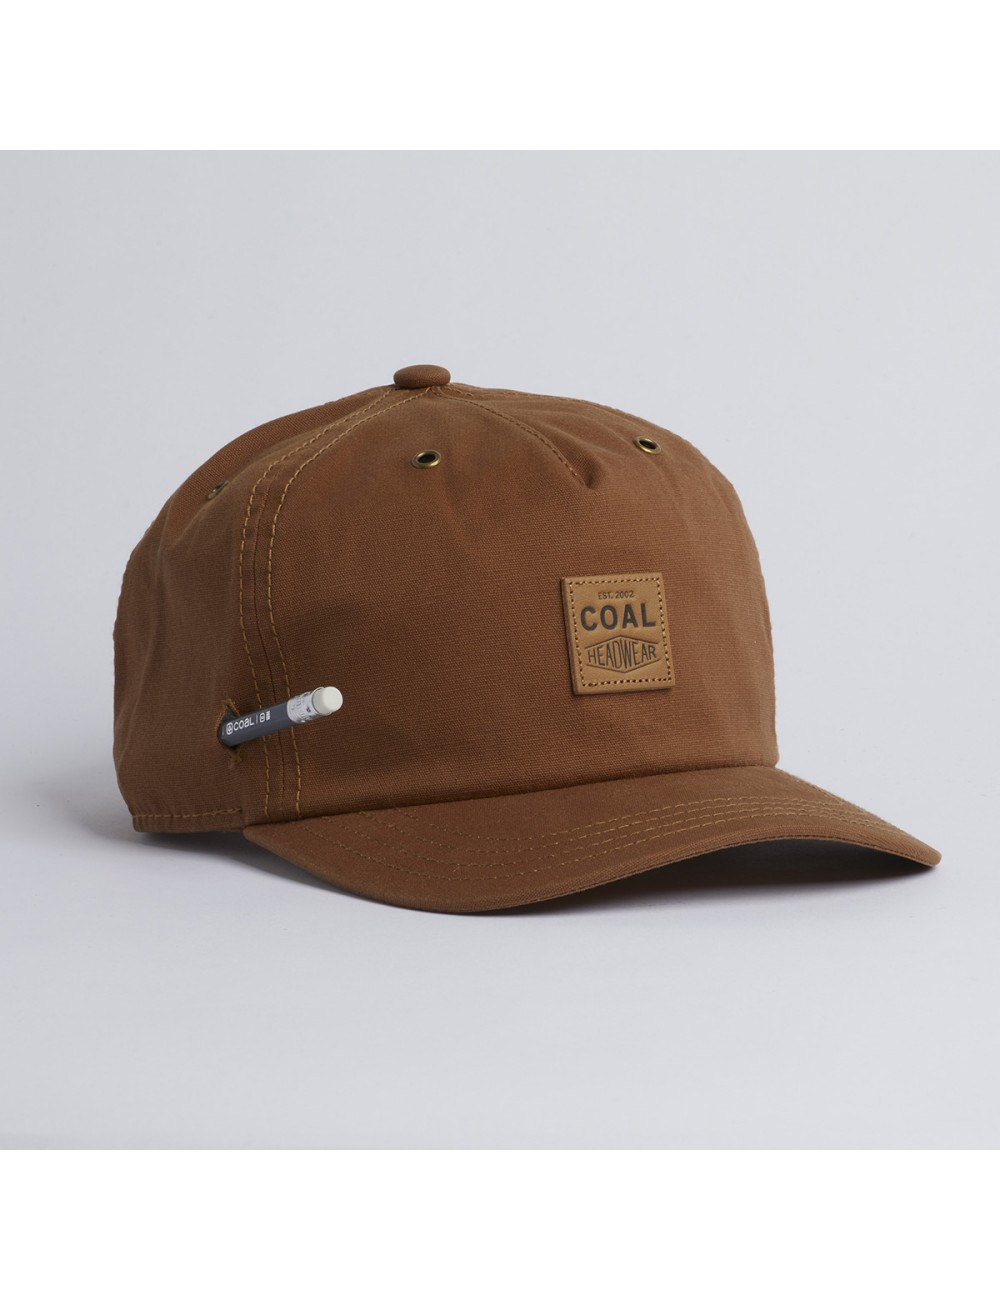 Coal The Clayton Cap - light brown